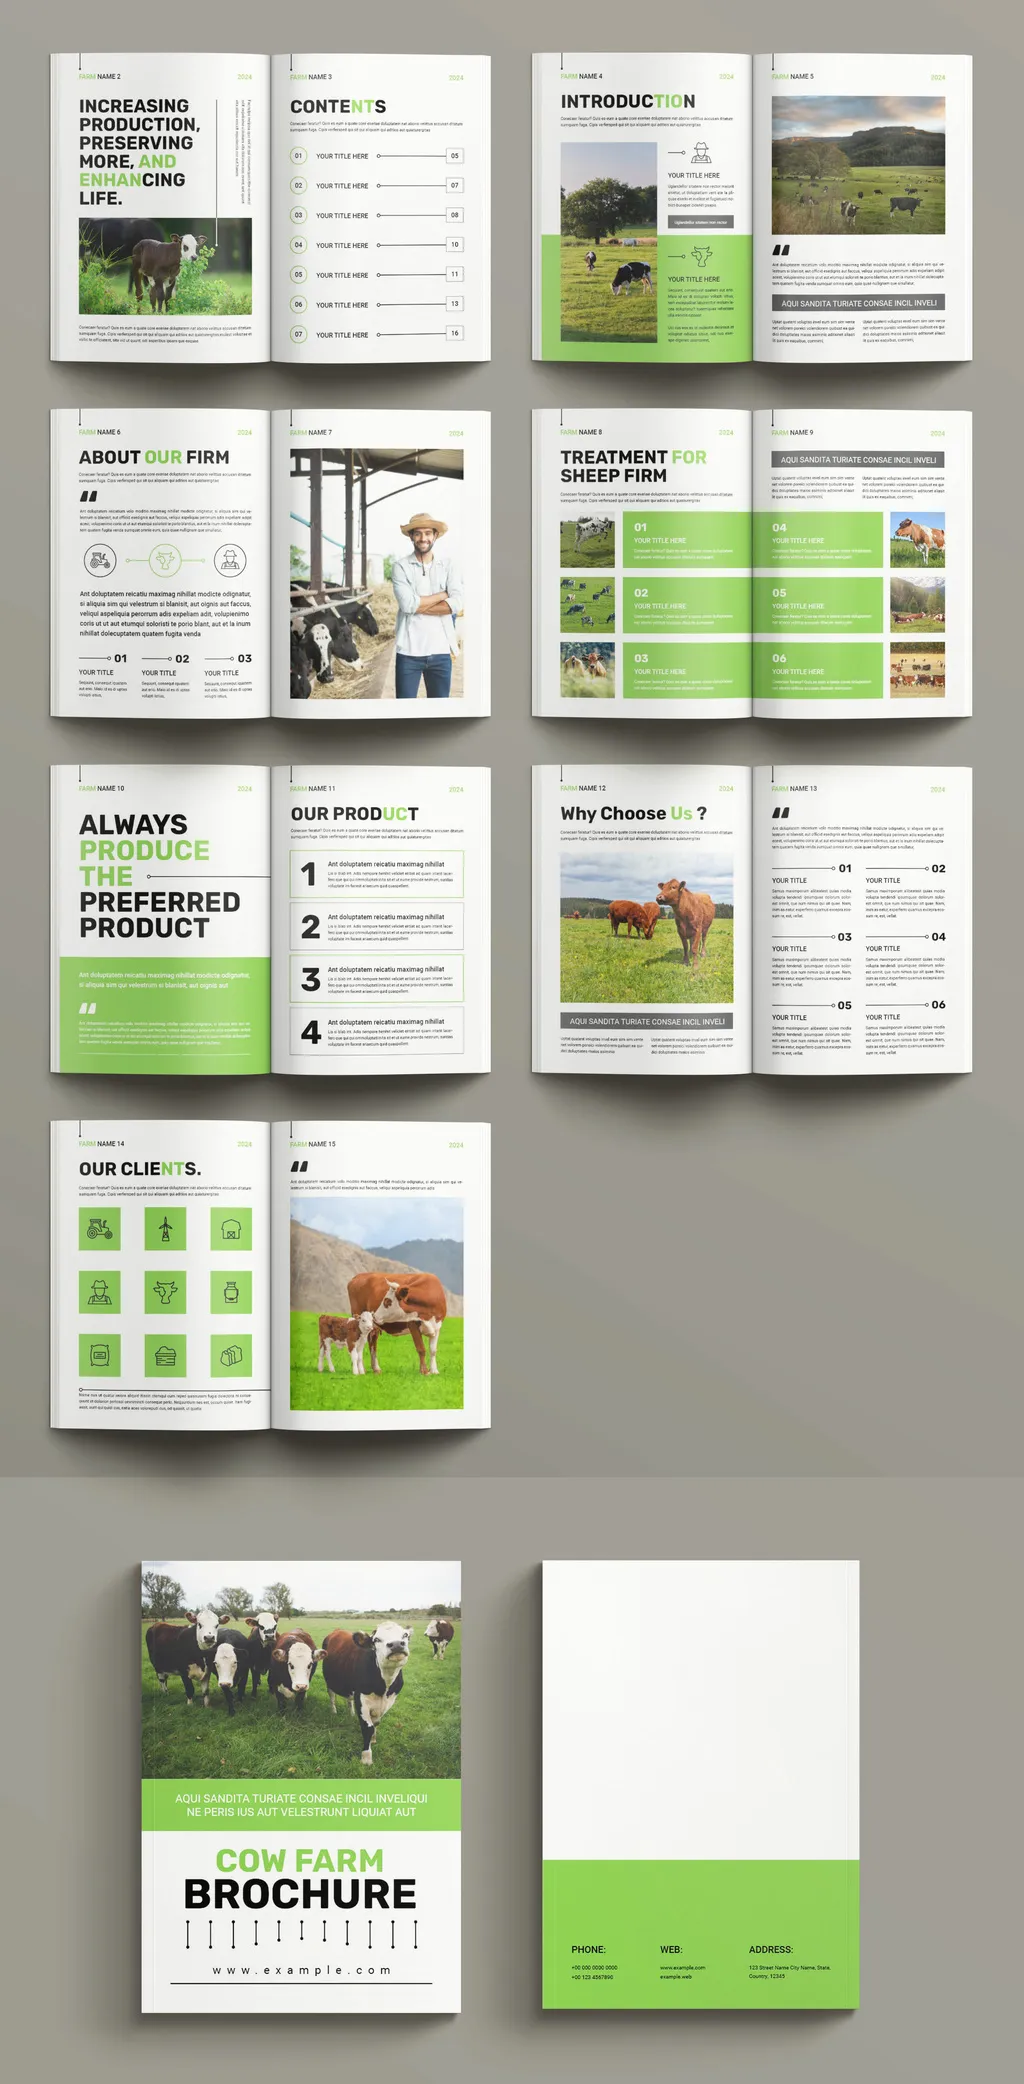 Adobestock - Cow Farm Brochure Template 722095496